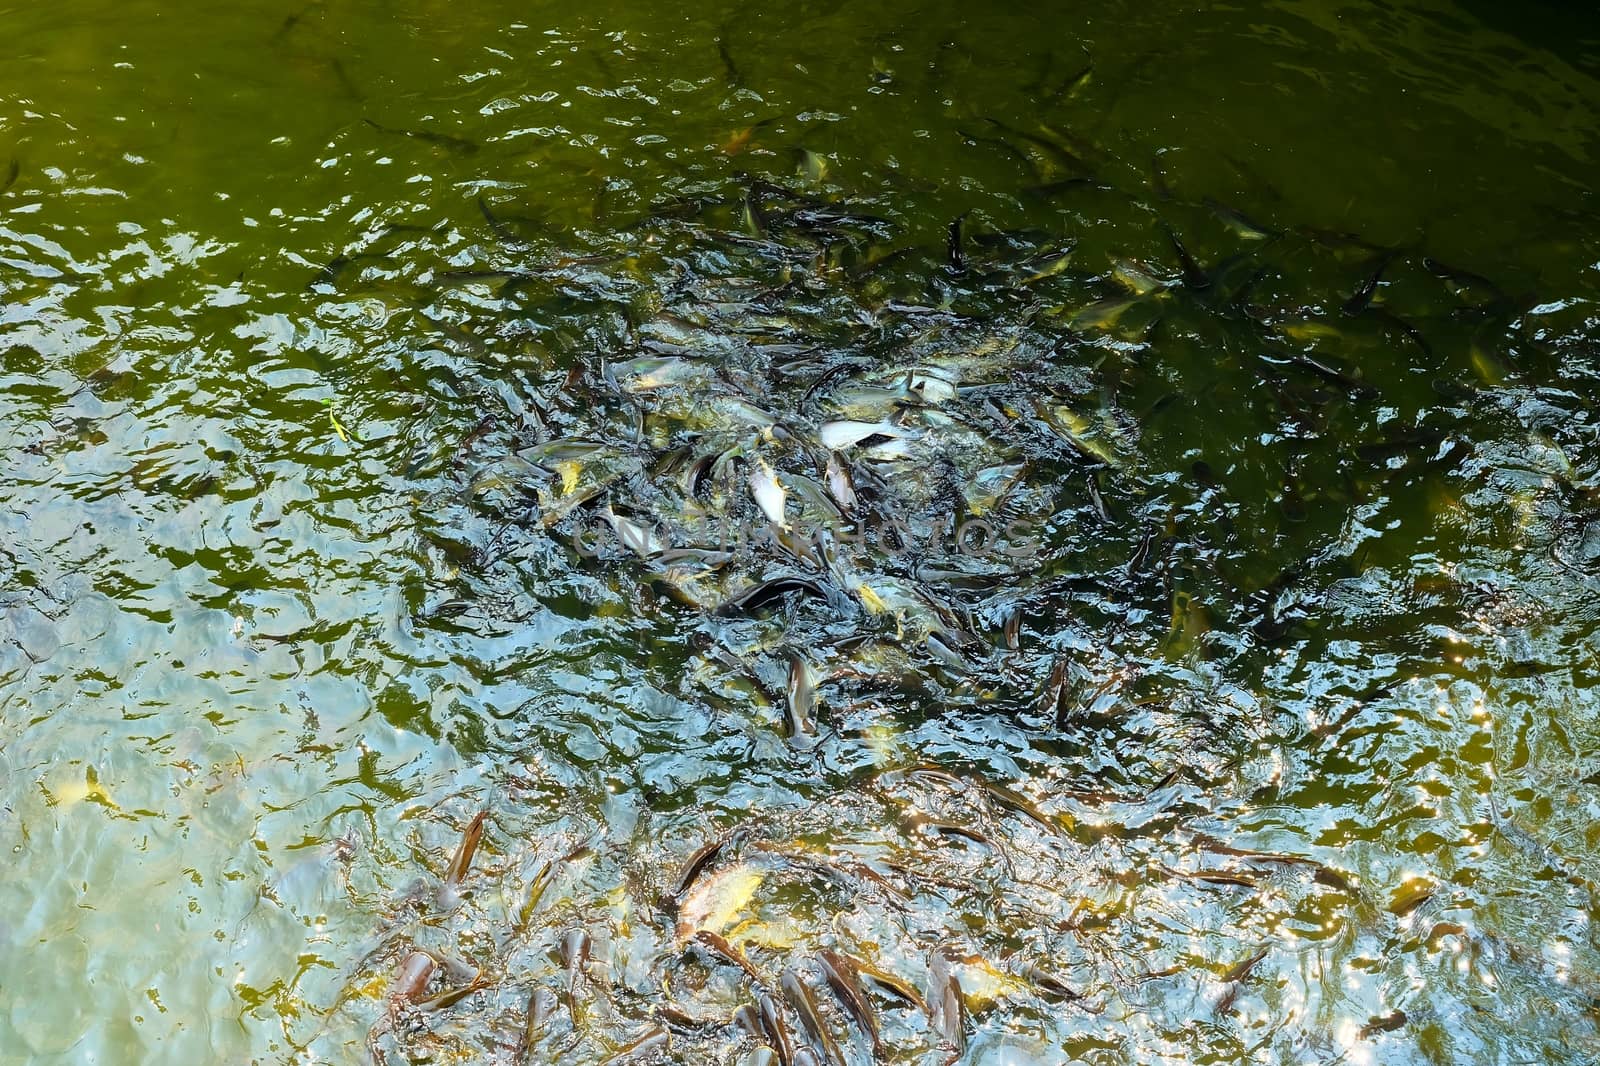 Feeding Fish in Pool.